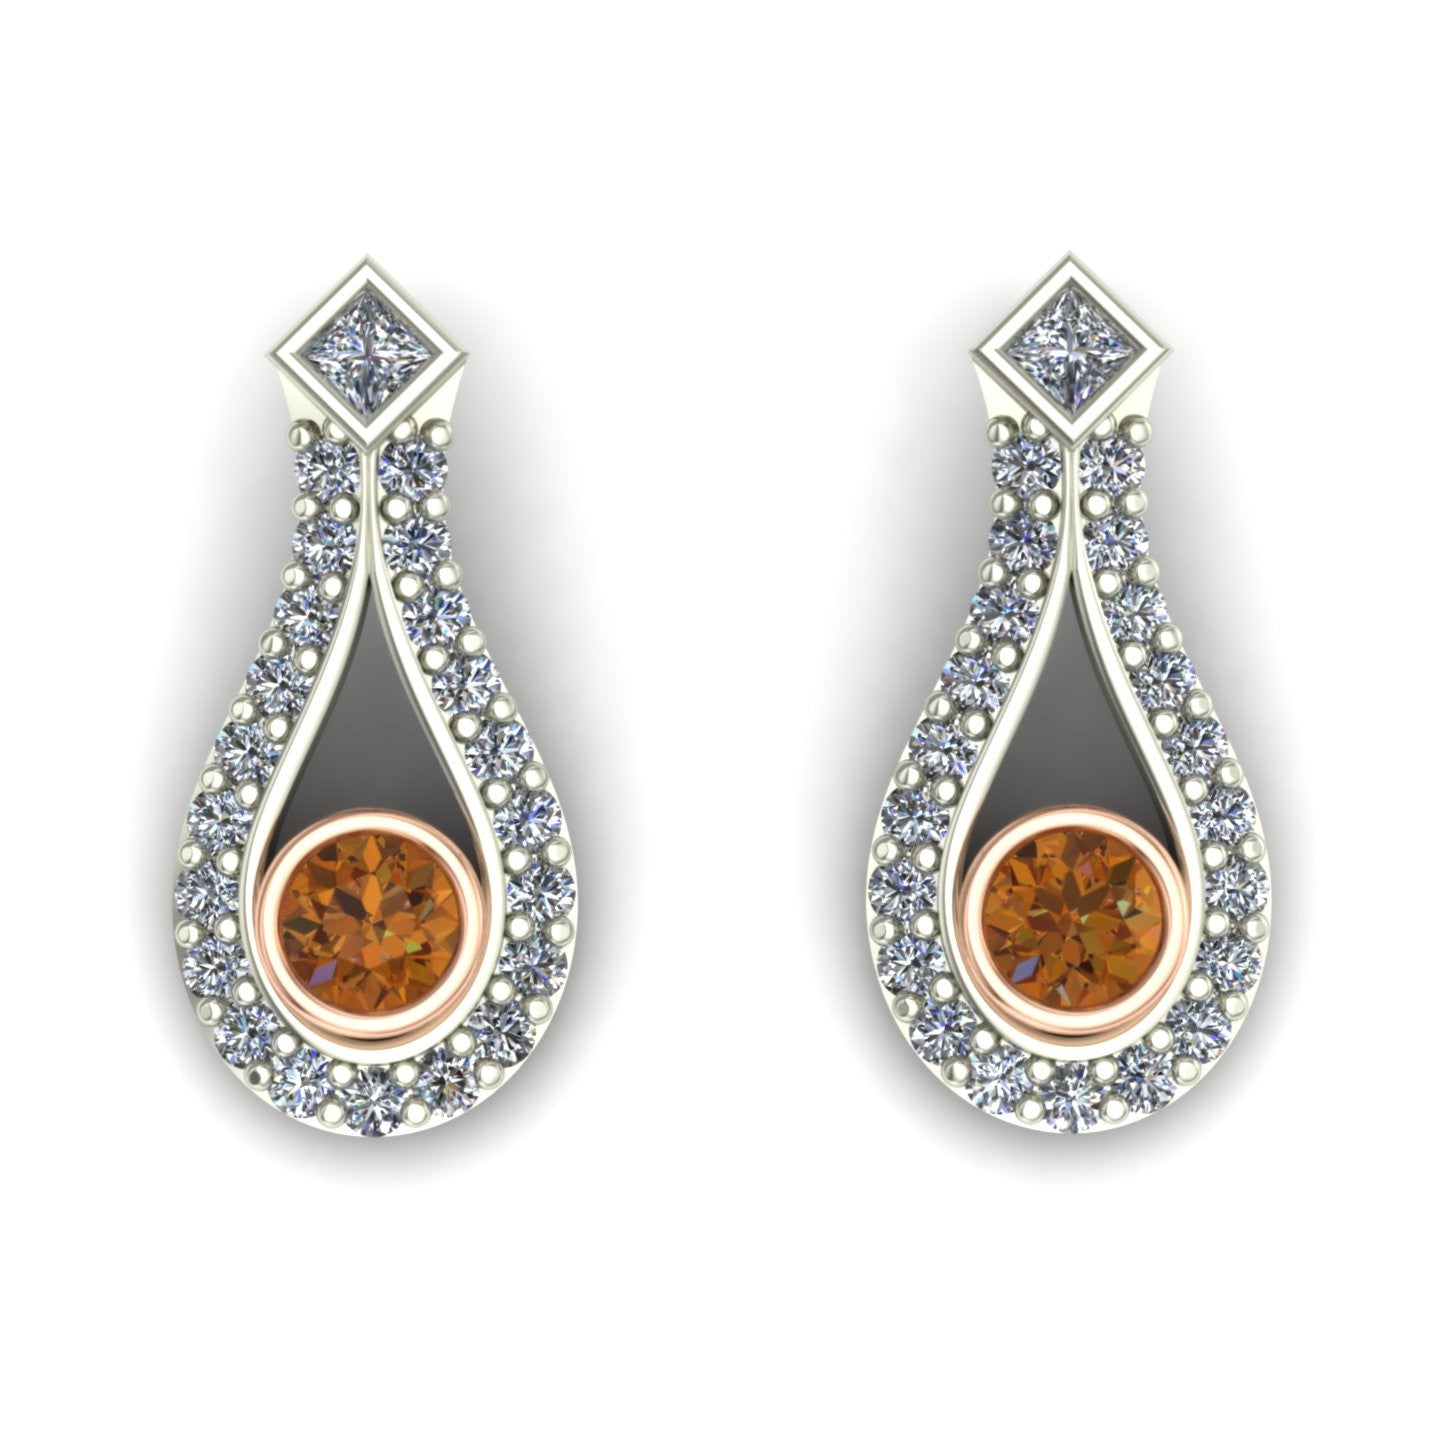 bezel set cognac diamond two tone earrings in 14k rose and white gold - Charles Babb Designs